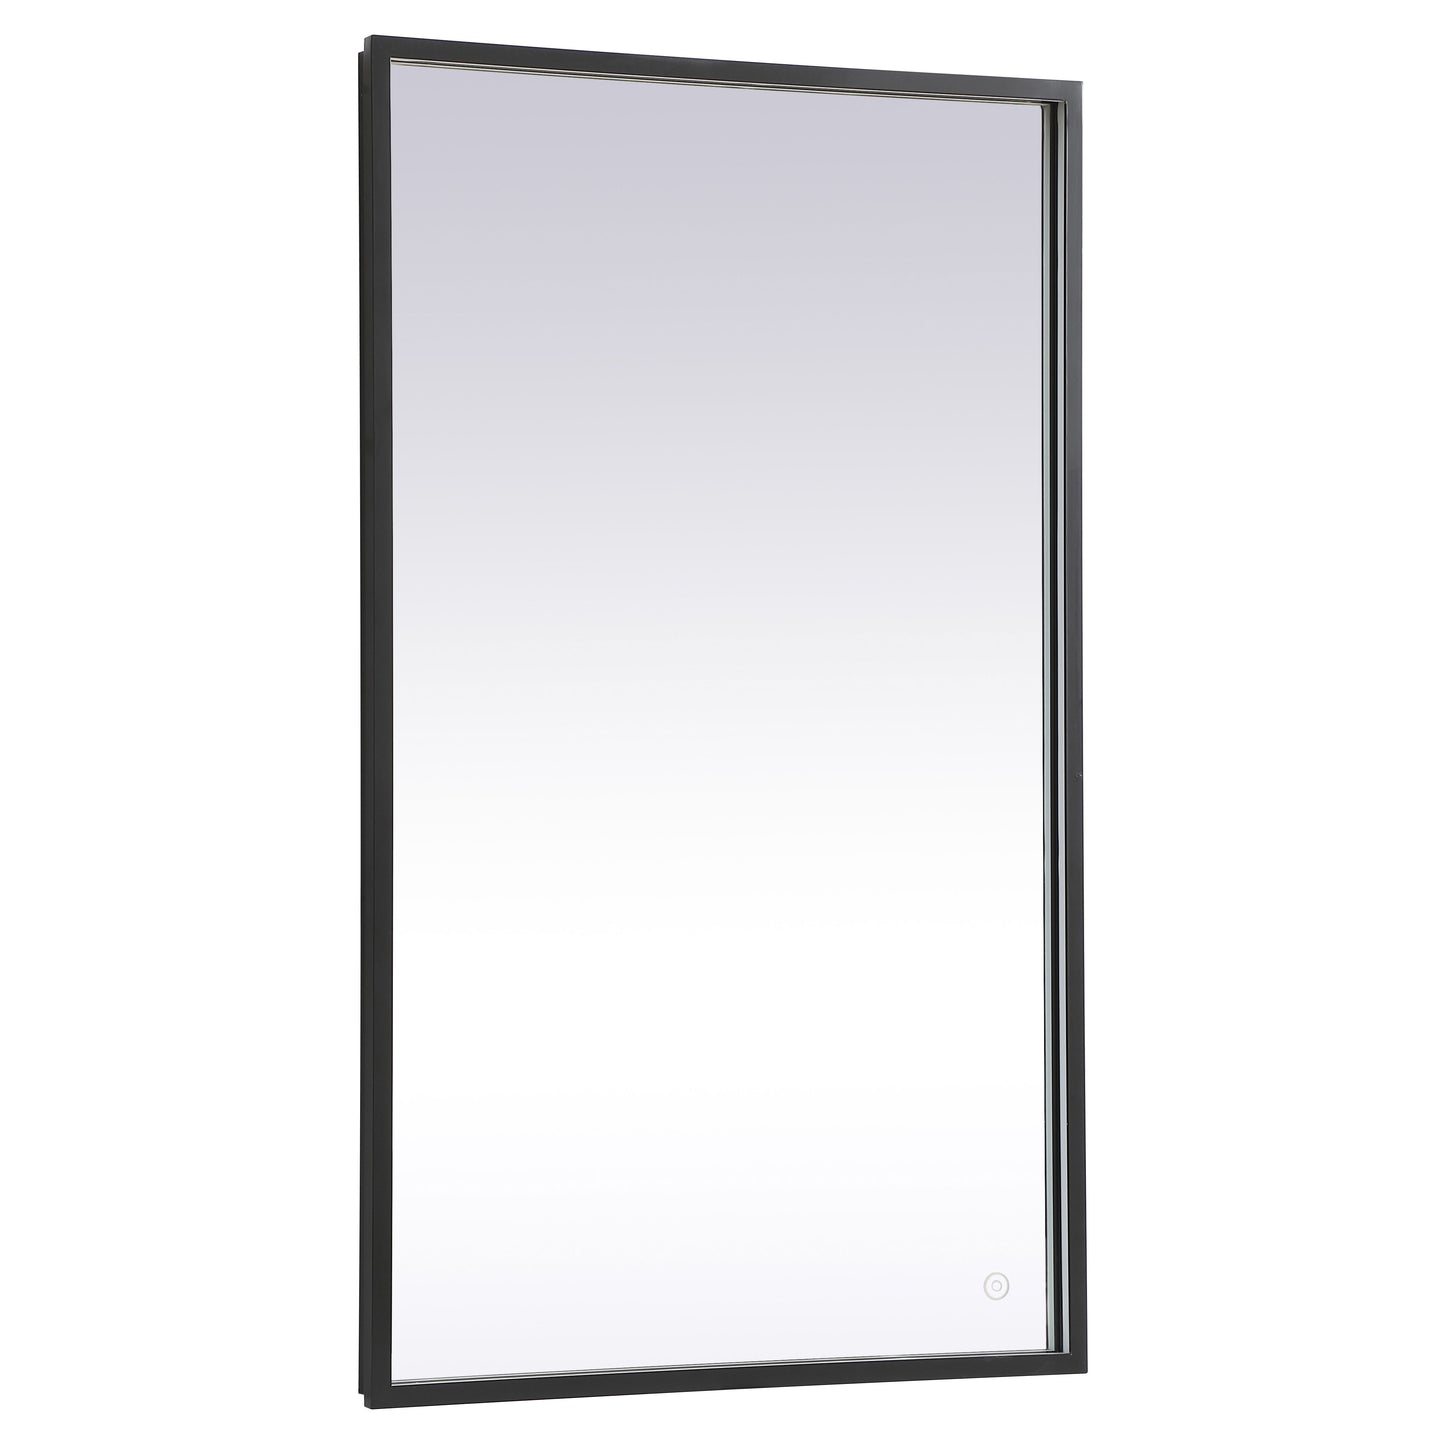 MRE62440BK Pier 24" x 40" LED Mirror in Black - Adjustable Color Temp